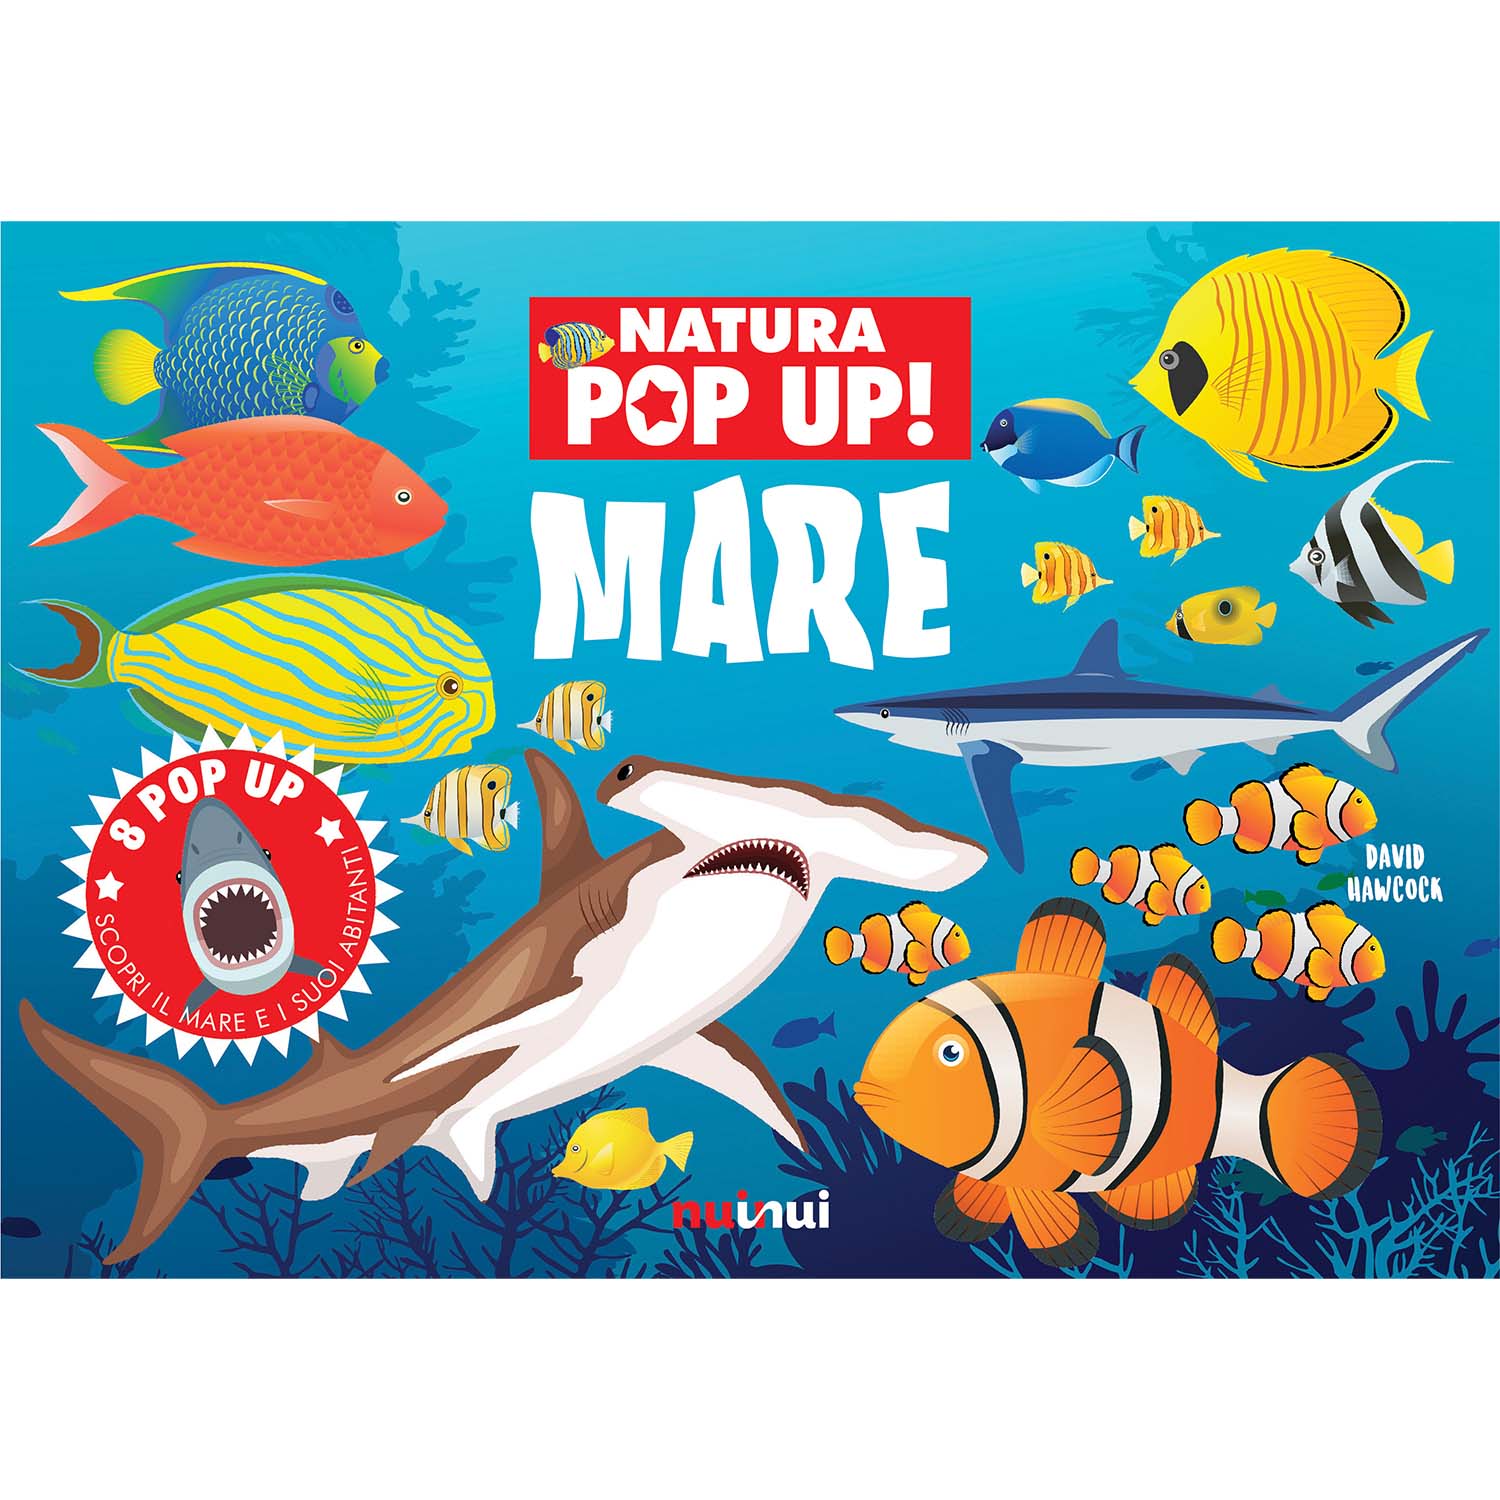 Natura pop up - Mare